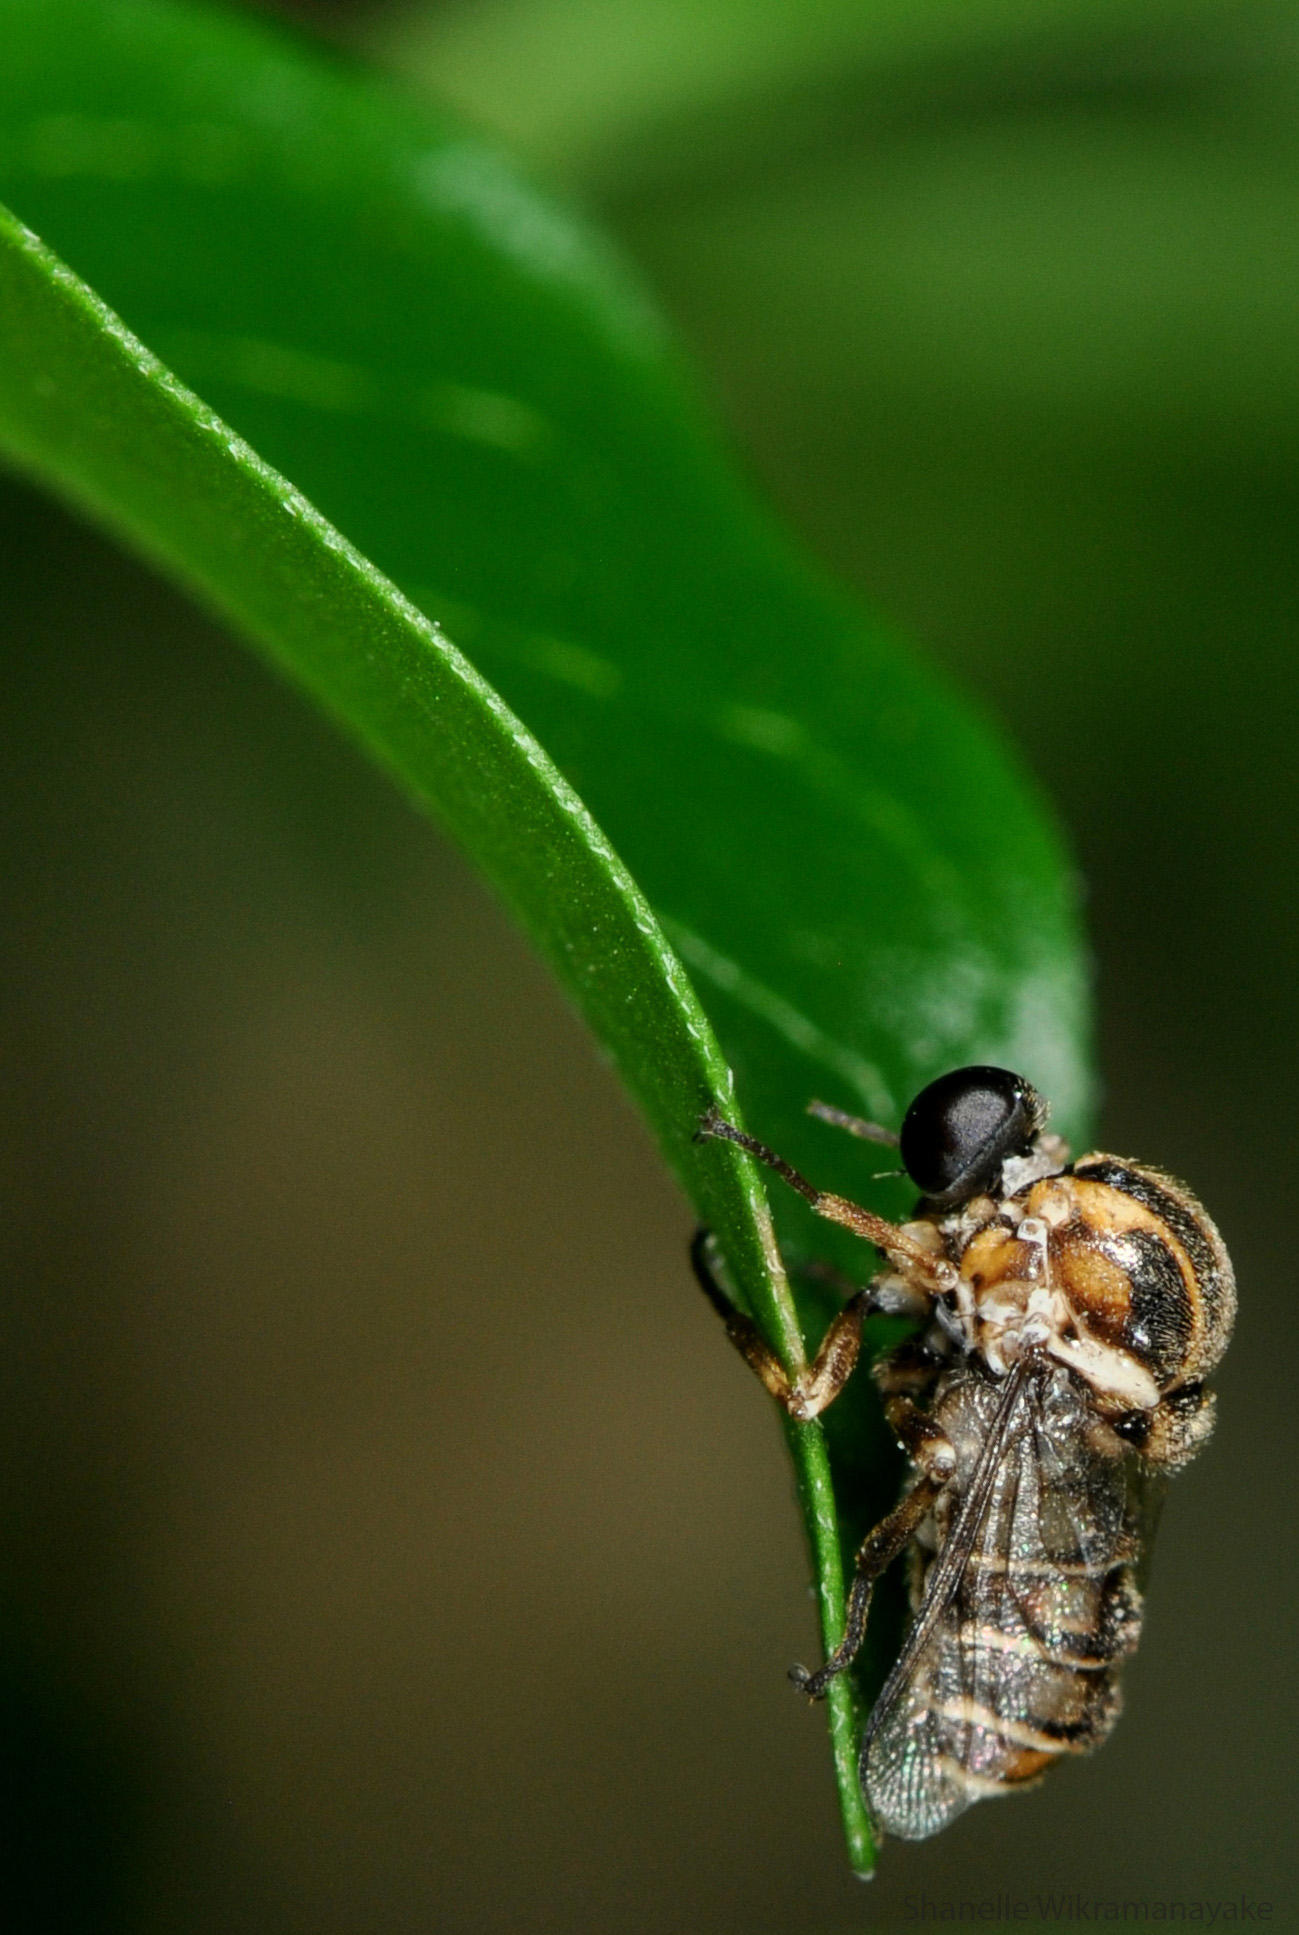 Nosedfly